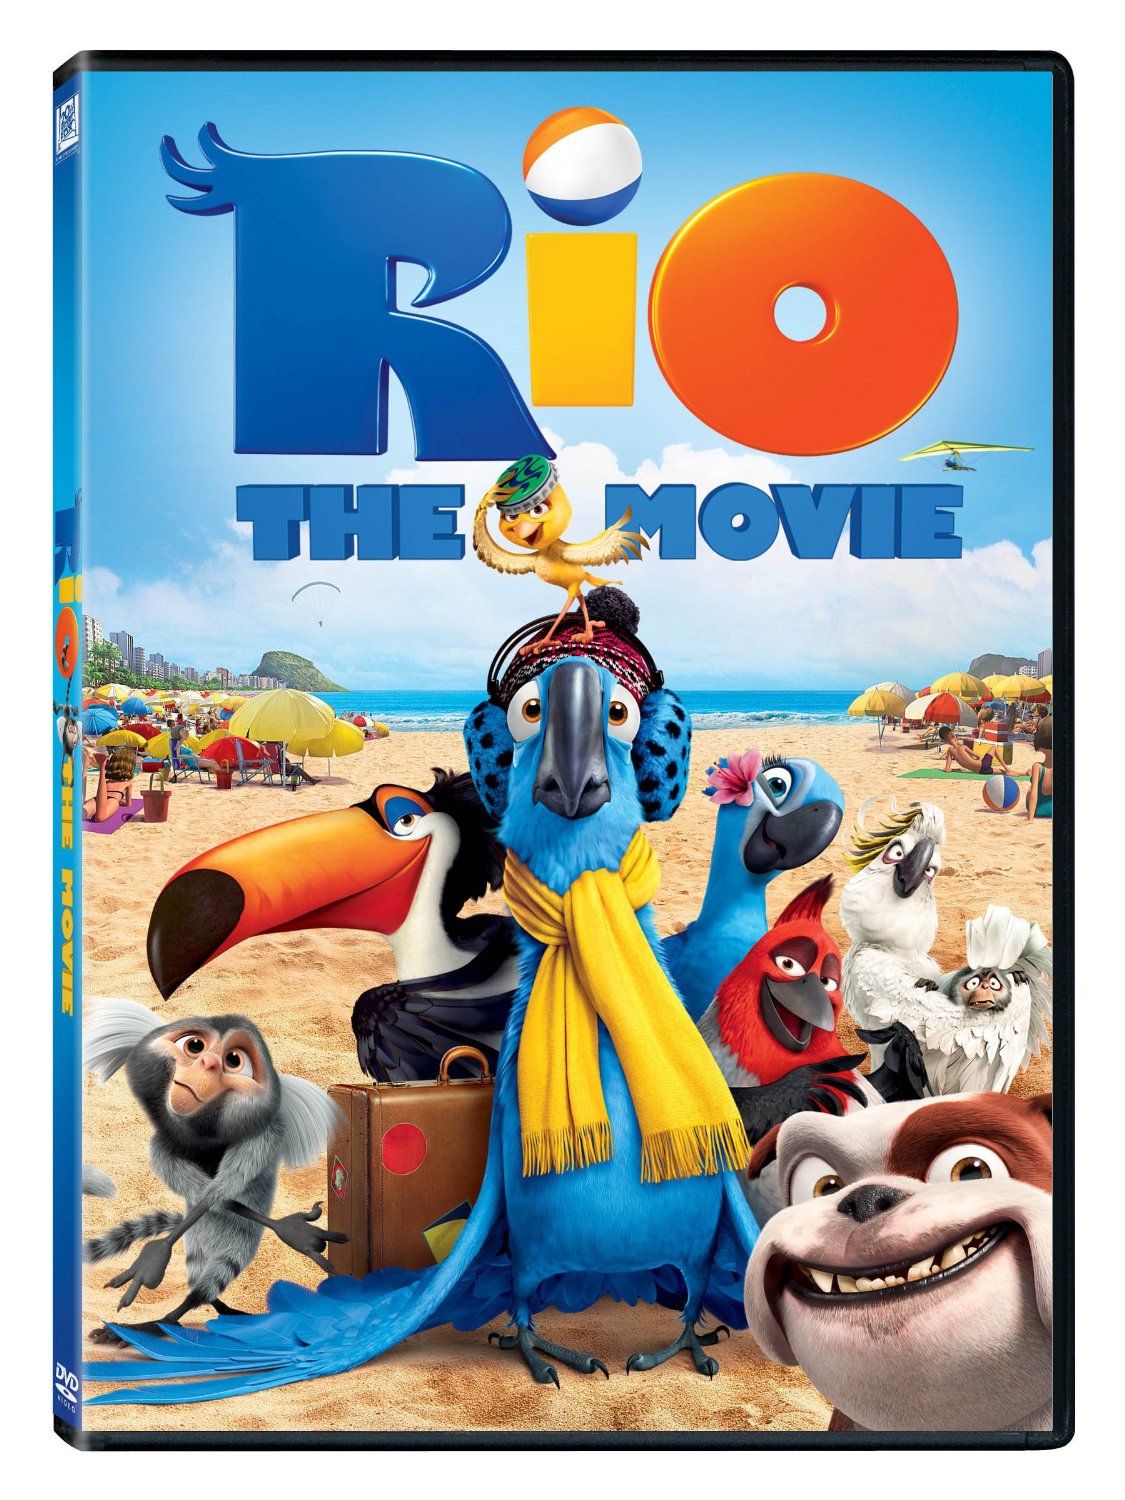 Rio The Movie on DVD Only $9.12 – 70% Savings